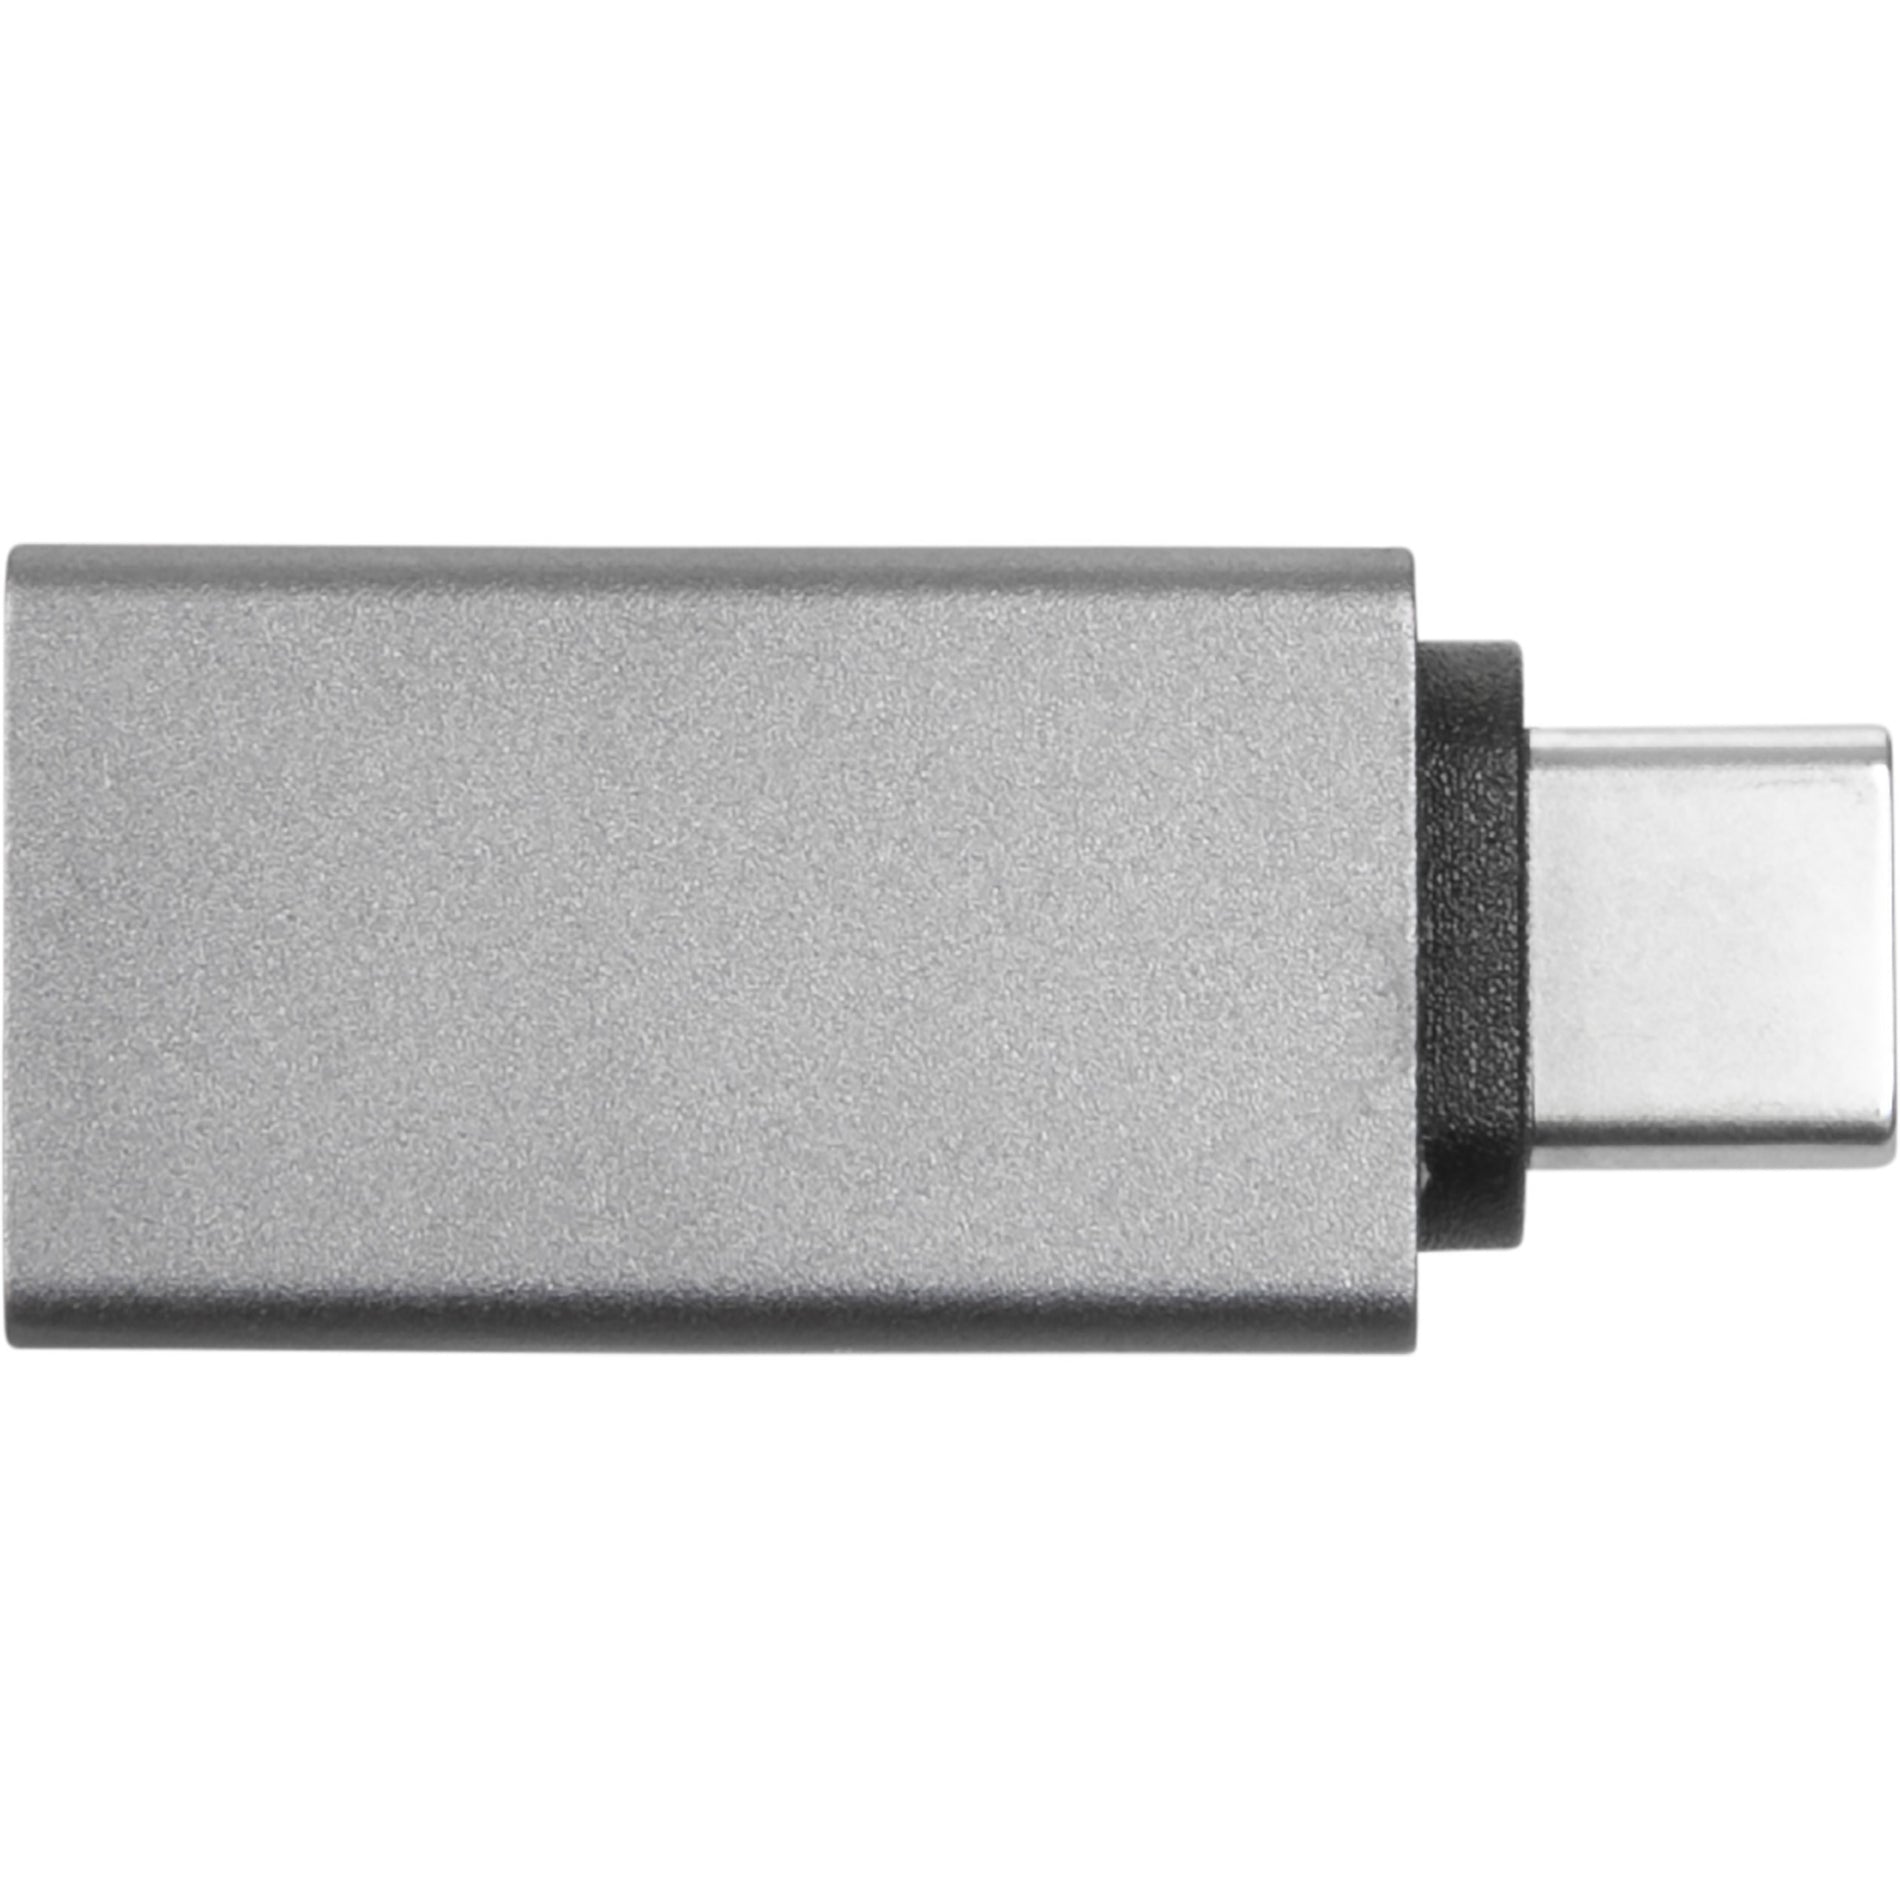 Targus ACA979GL USB/USB-C 데이터 전송 어댑터 - 회색 2 팩